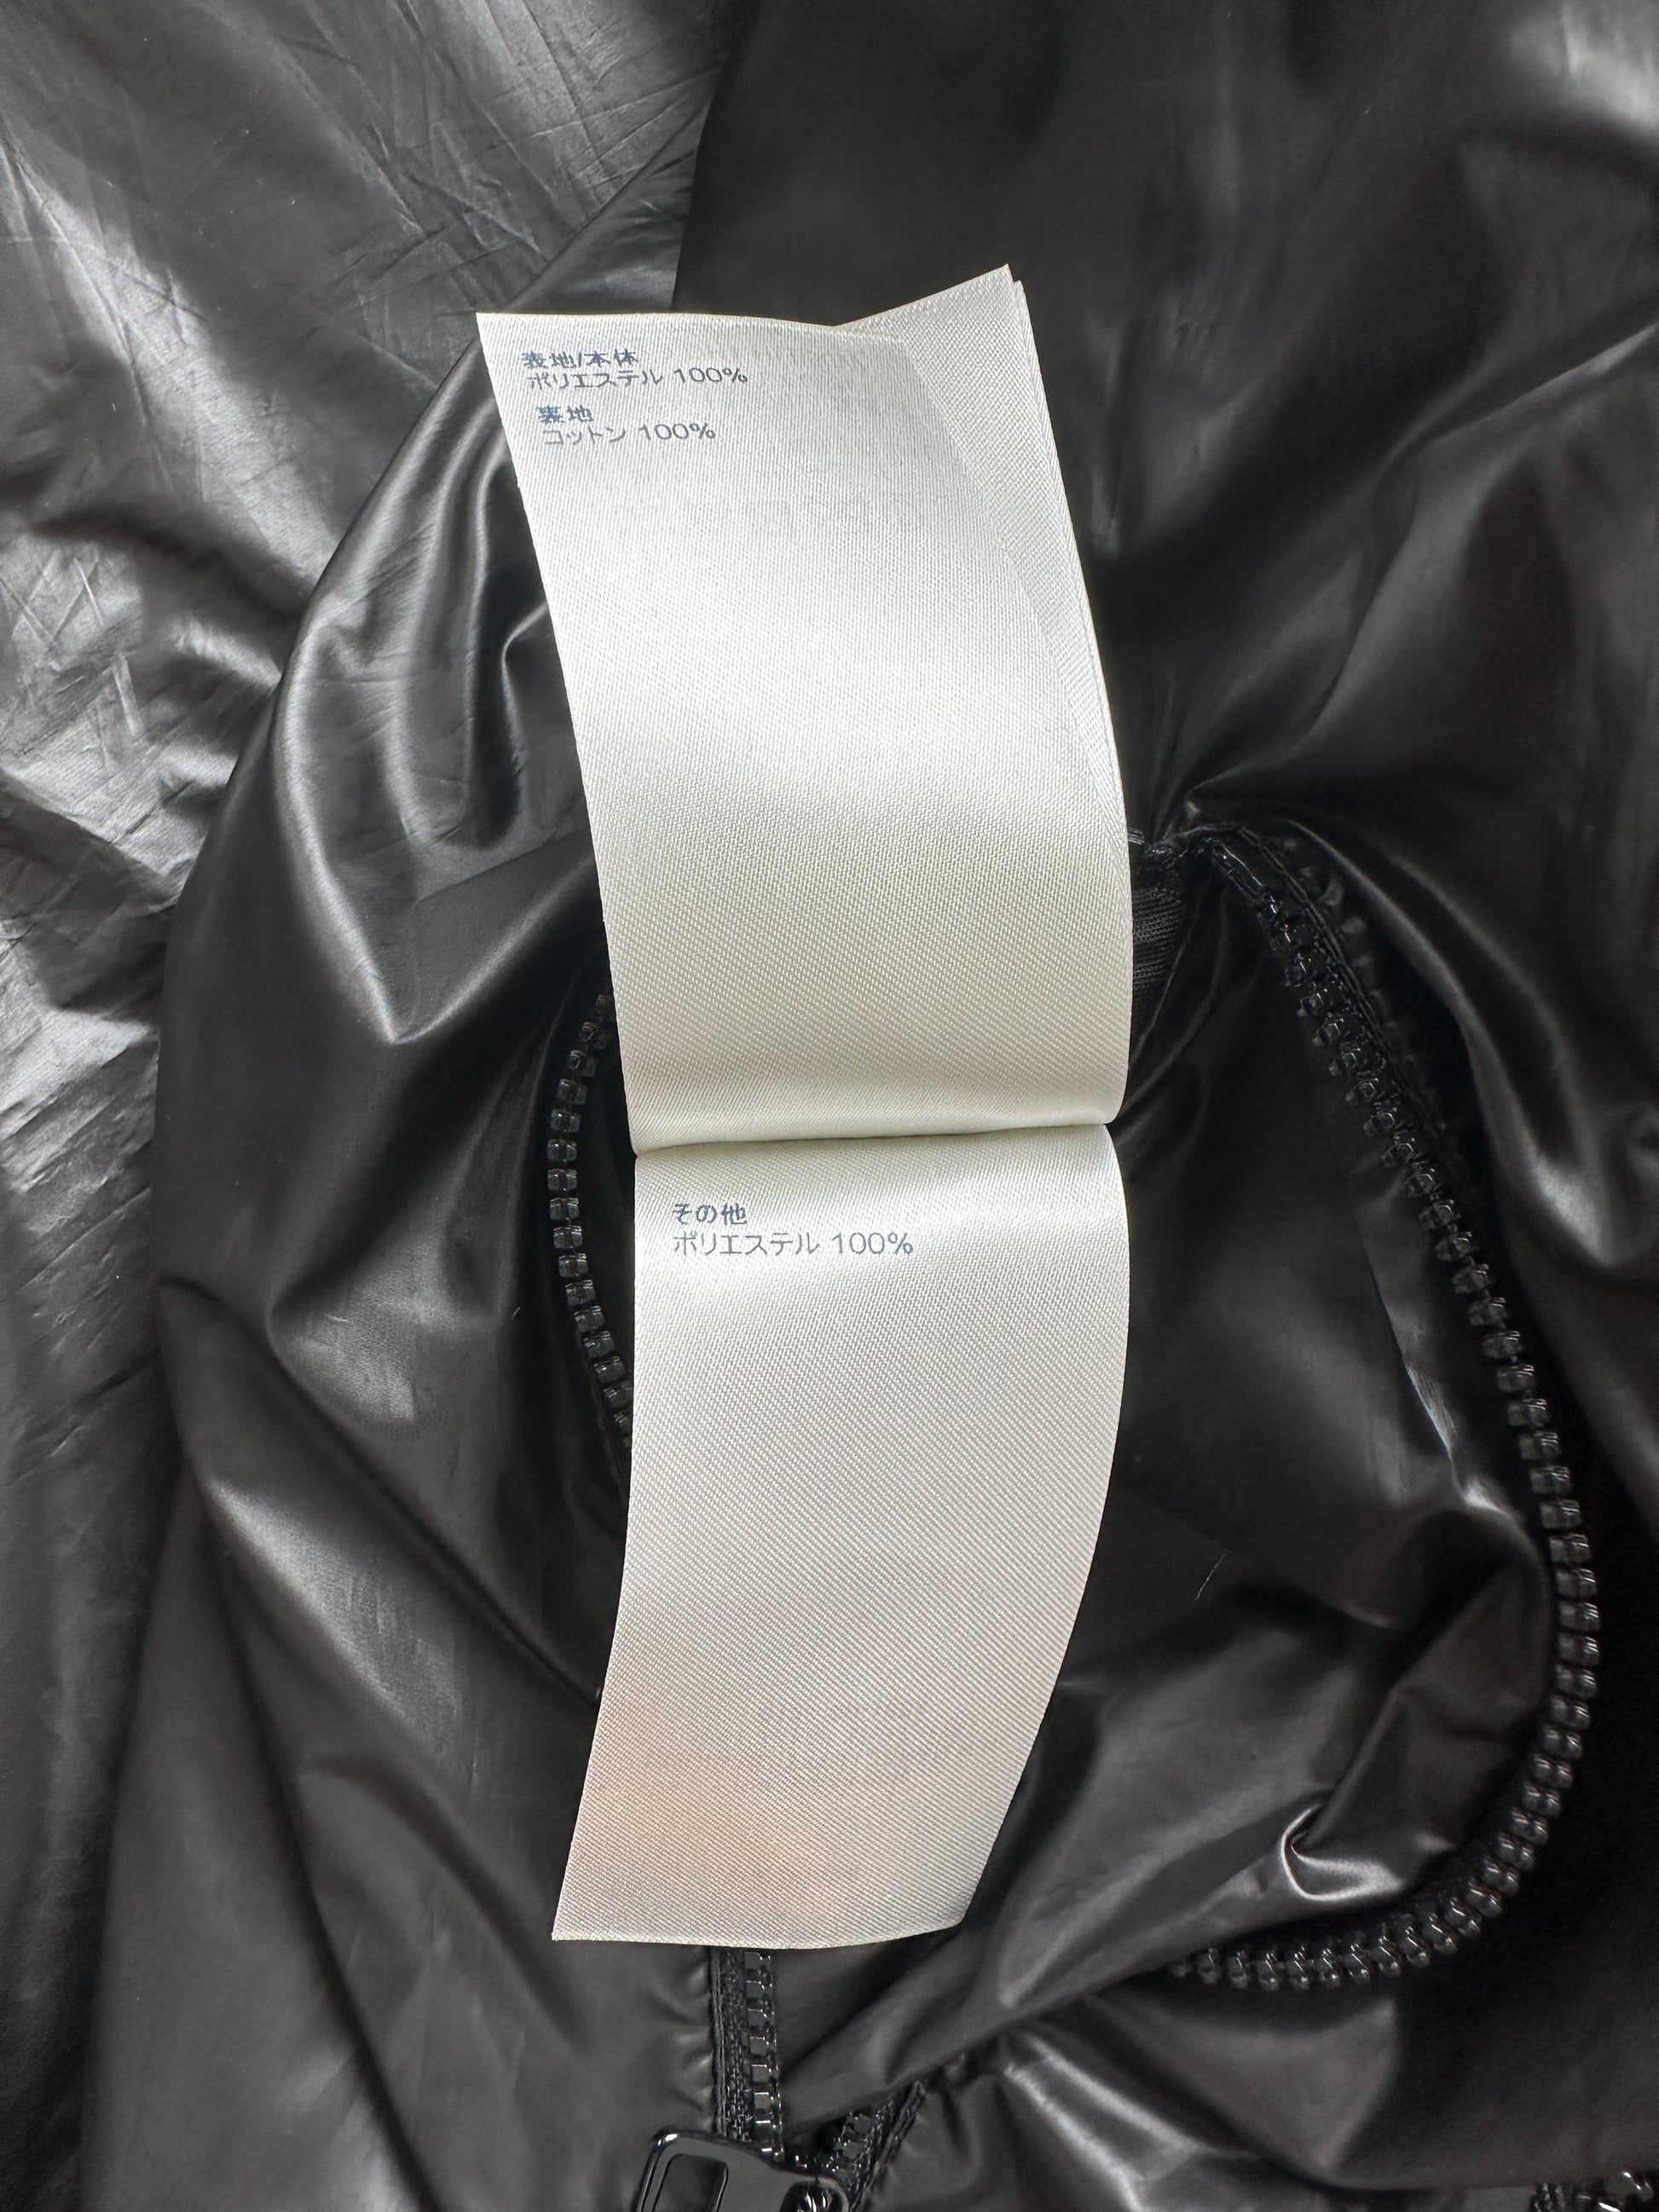 Louis Vuitton Reversible Quilted Monogram Flower Jacket BLACK. Size 40